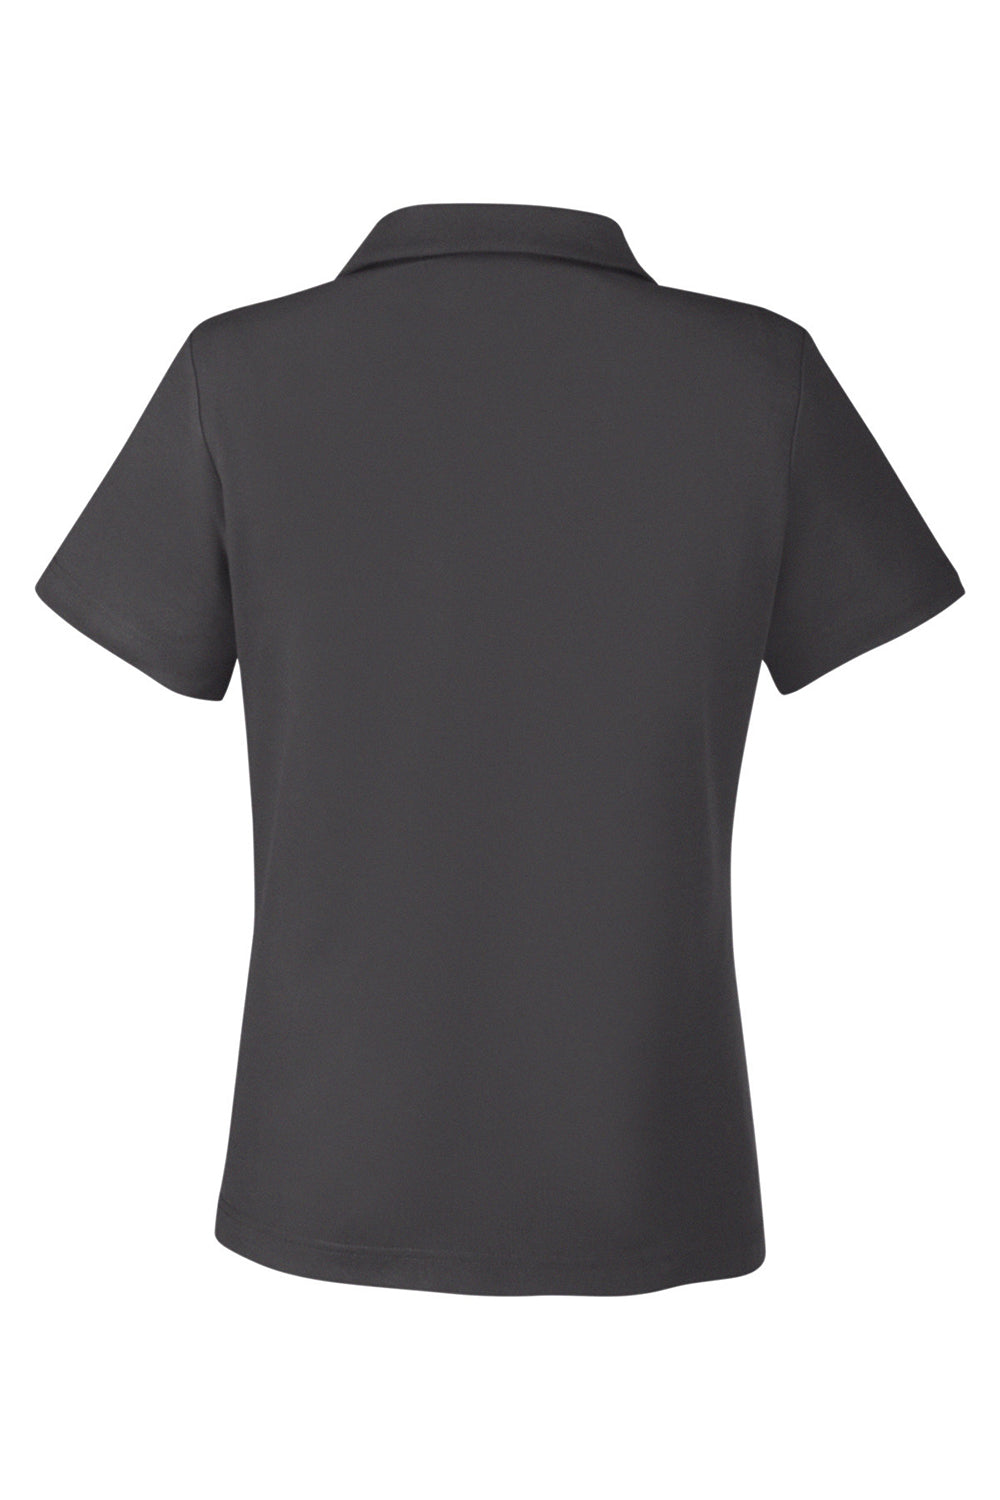 Core 365 CE112W Womens Fusion ChromaSoft Performance Moisture Wicking Pique Short Sleeve Polo Shirt Carbon Grey Flat Back